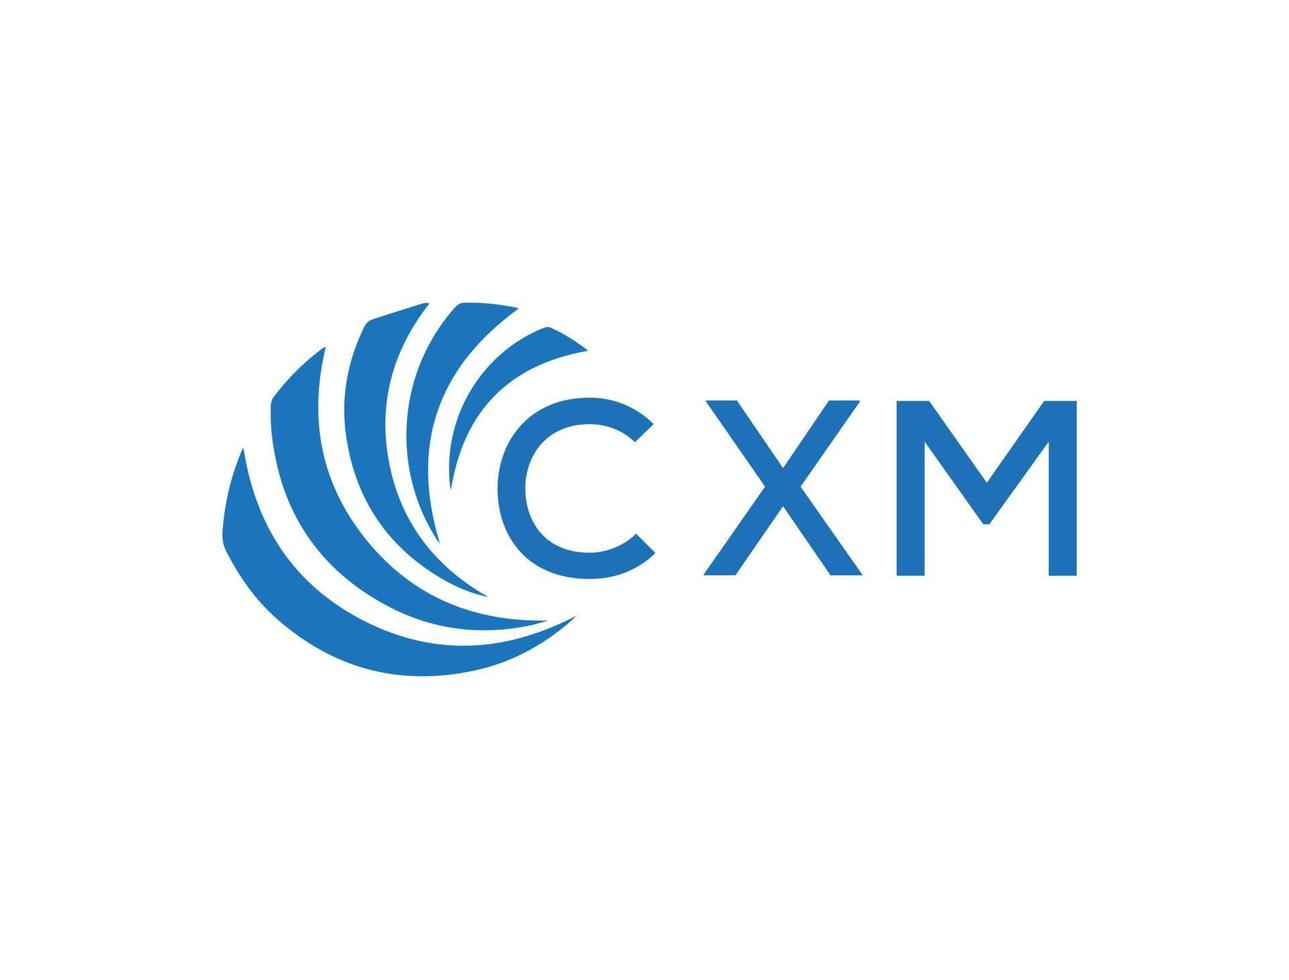 cxm letra logo diseño en blanco antecedentes. cxm creativo circulo letra logo concepto. cxm letra diseño. vector